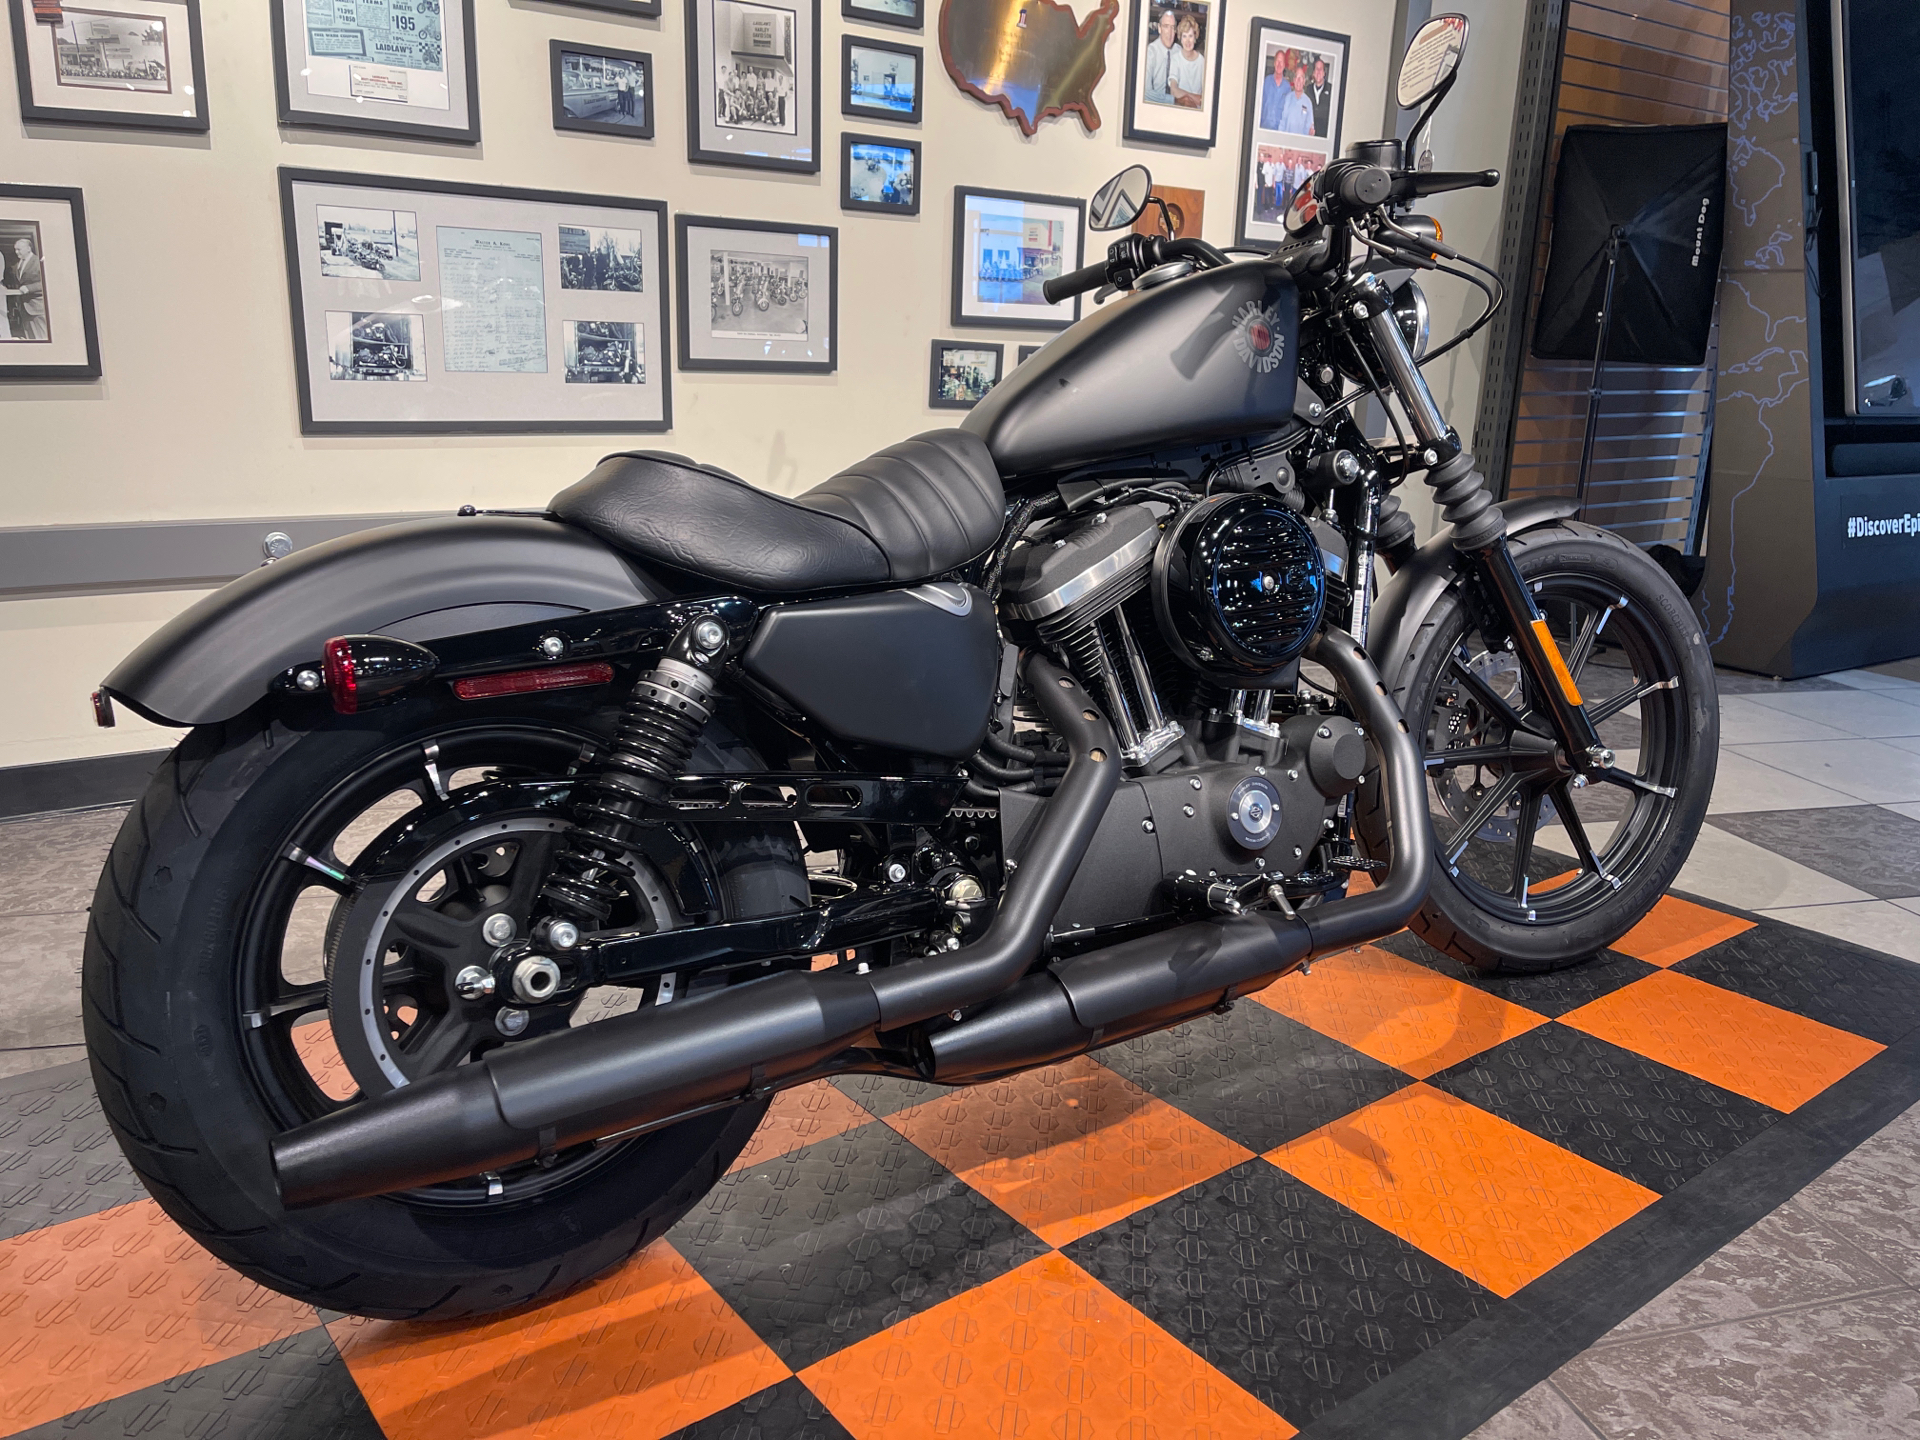 New 2021 Harley Davidson Iron 883 Black Denim Baldwin Park Ca 29322